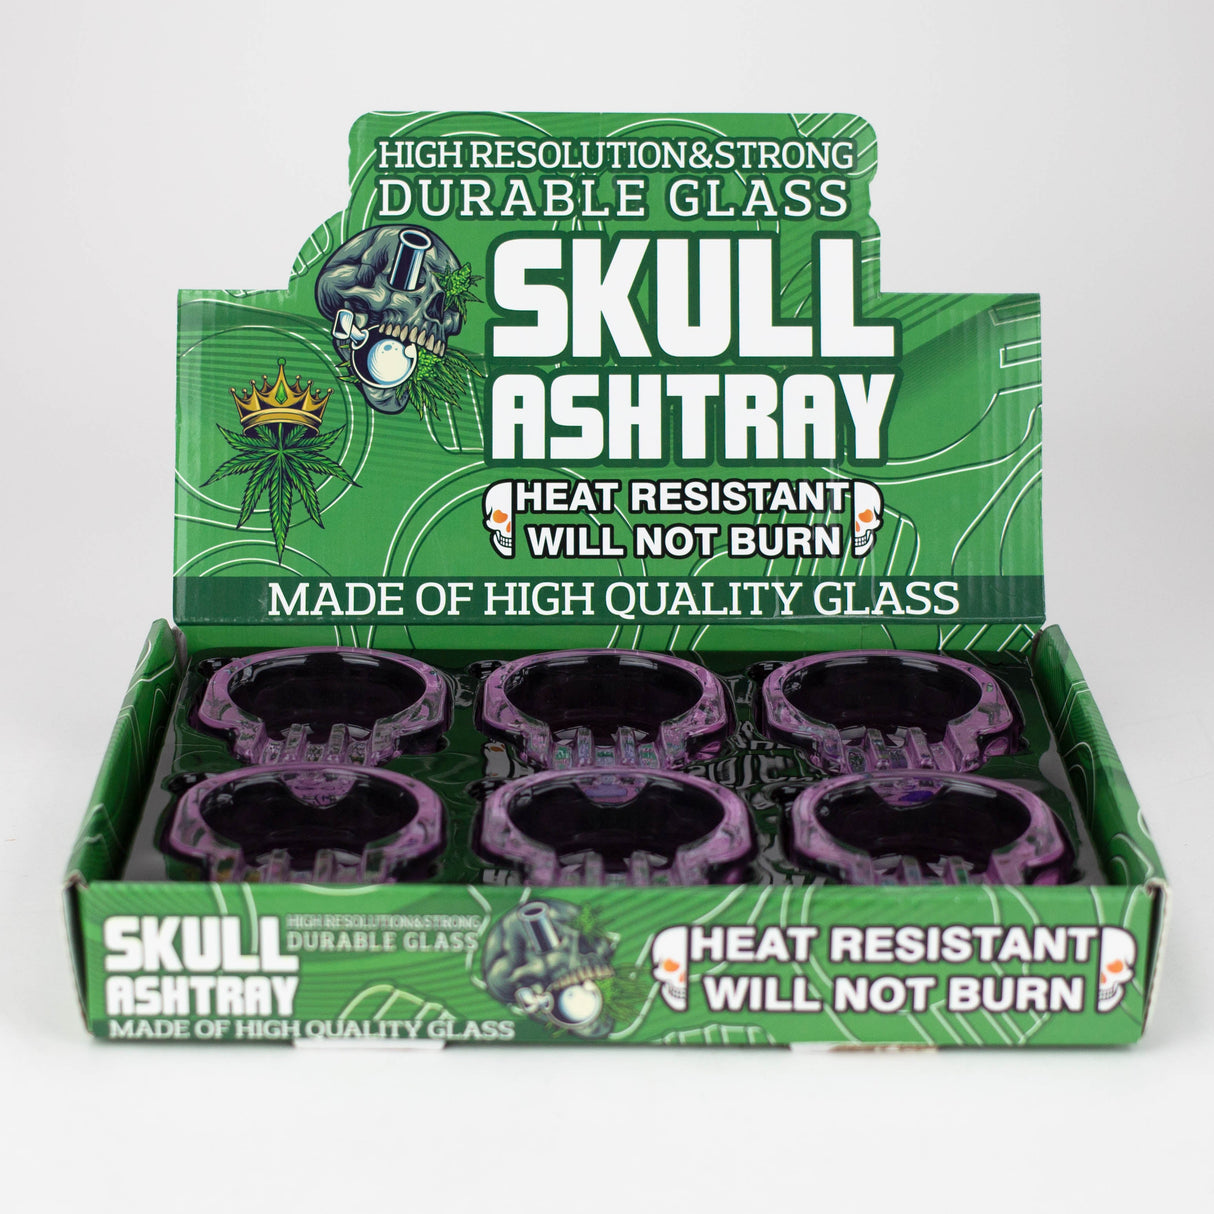 Skull glass ashtray Box of 6